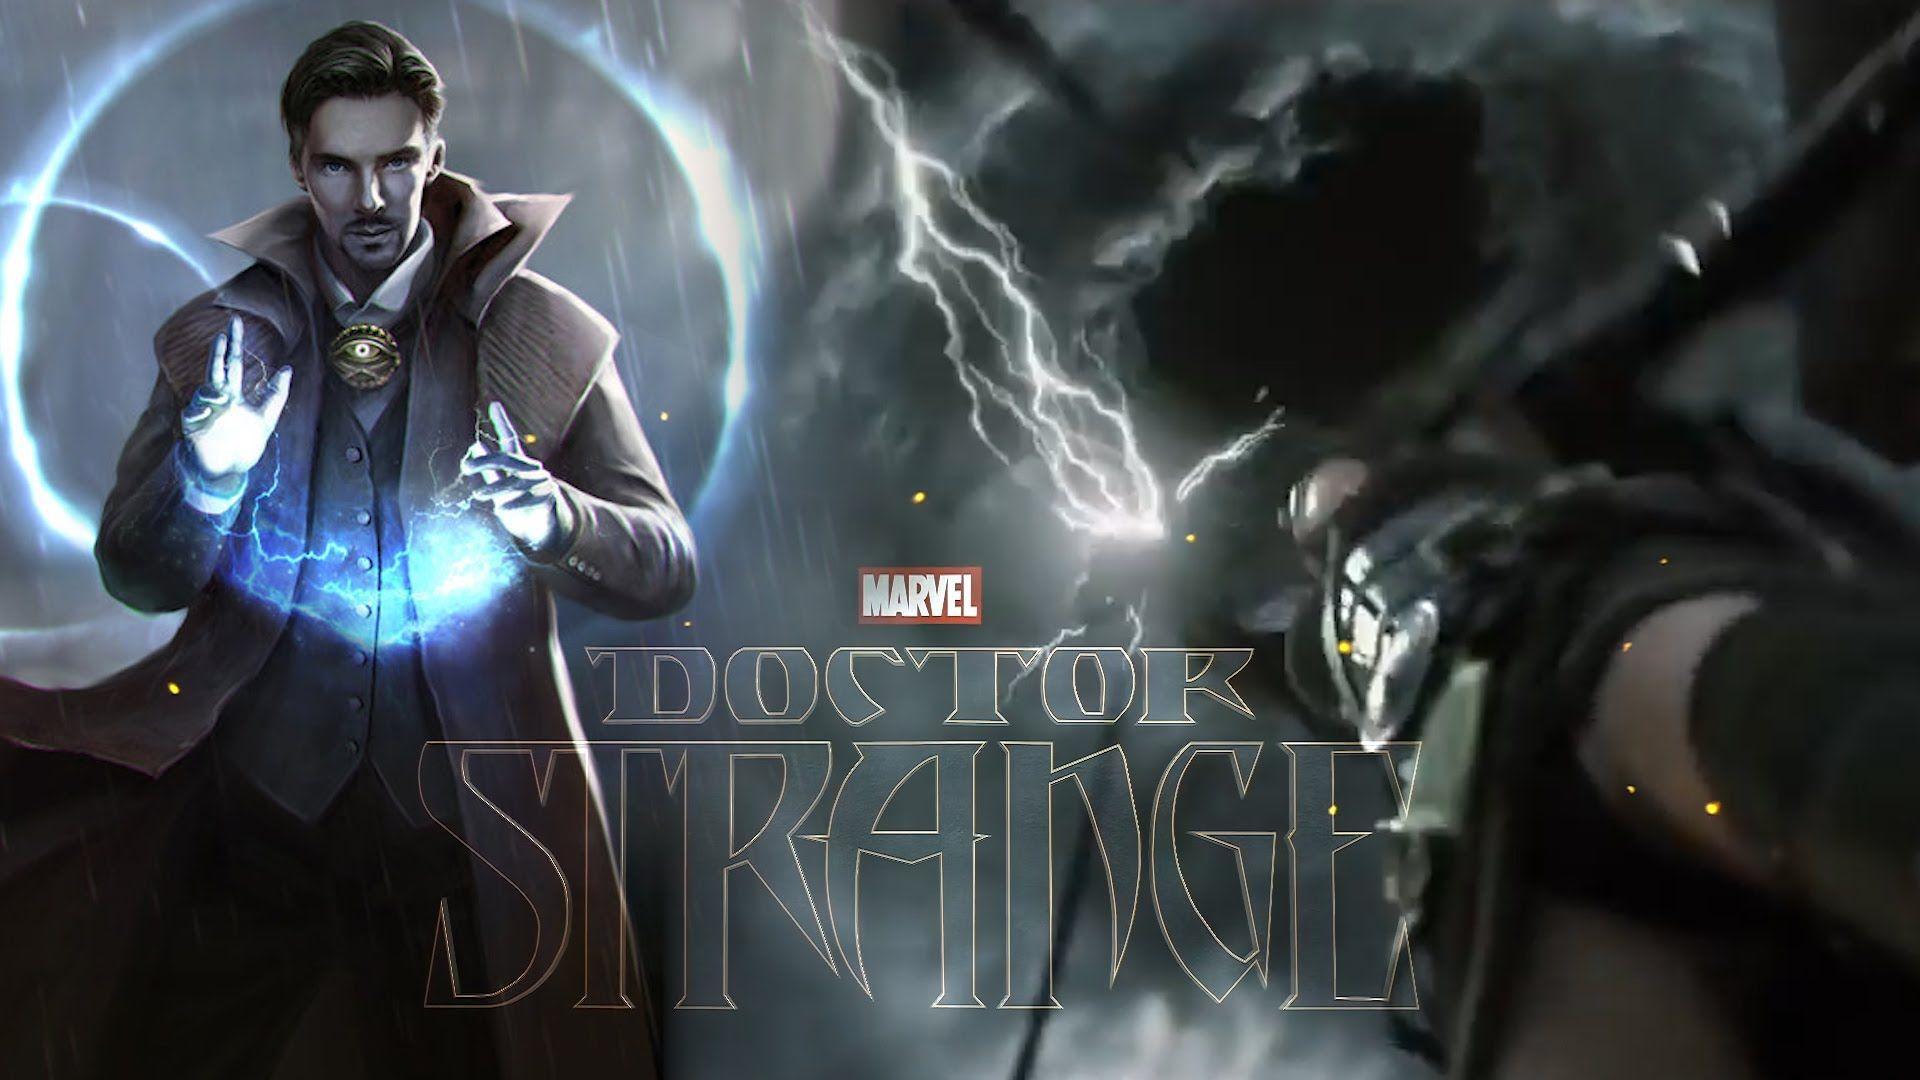 Doctor Strange Wallpapers High Resolution And Quality Doctor Strange Vs Captain America Civil War 342995 Hd Wallpaper Backgrounds Download